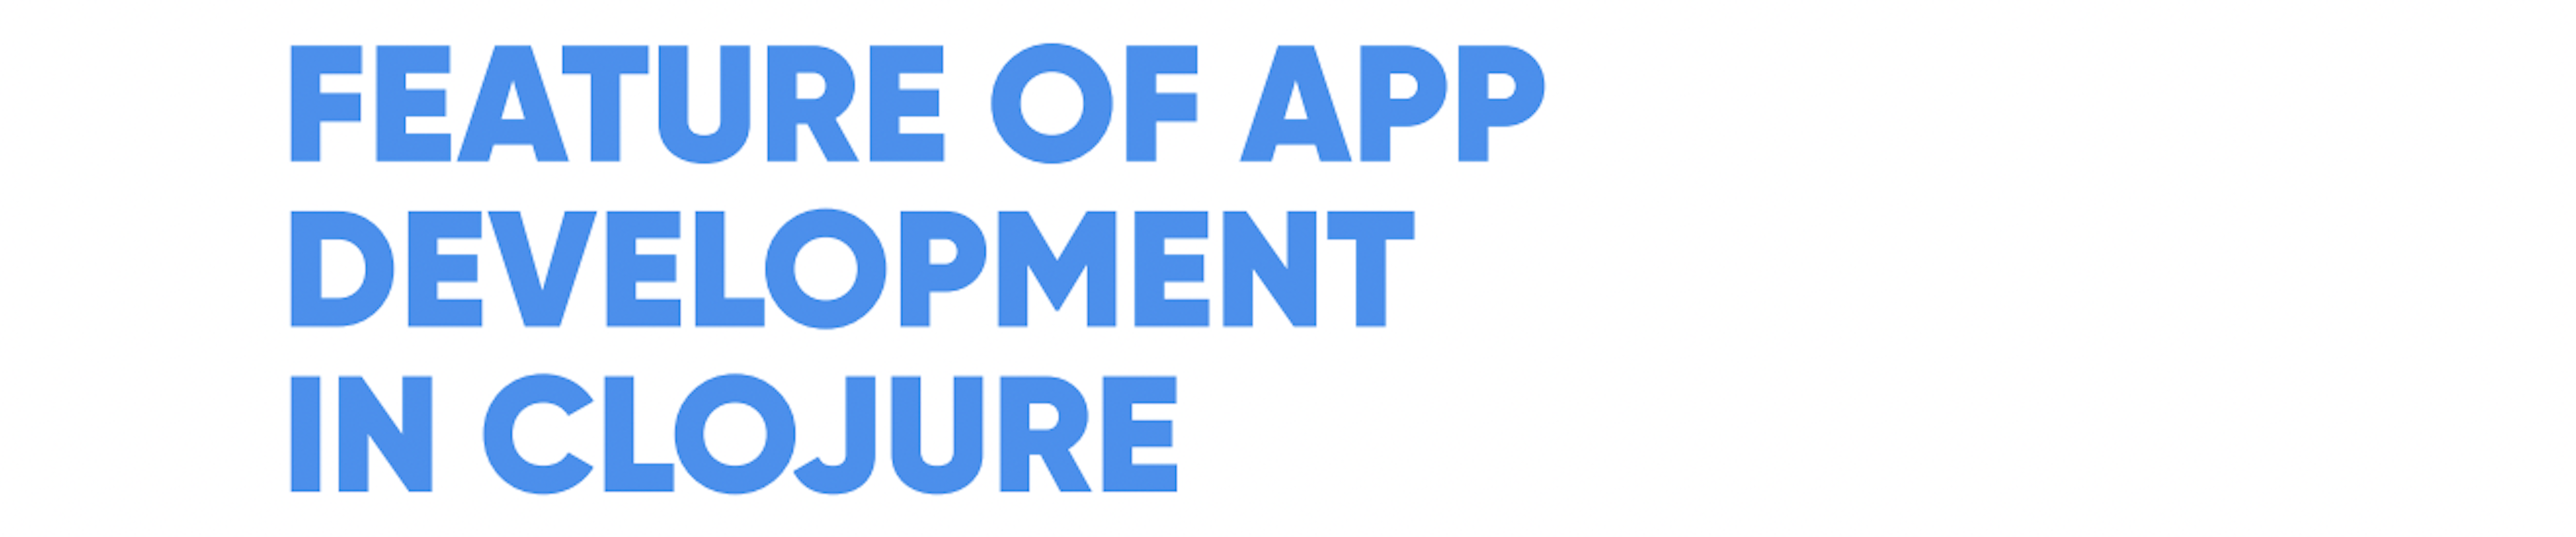 Feature of App Development in Clojure